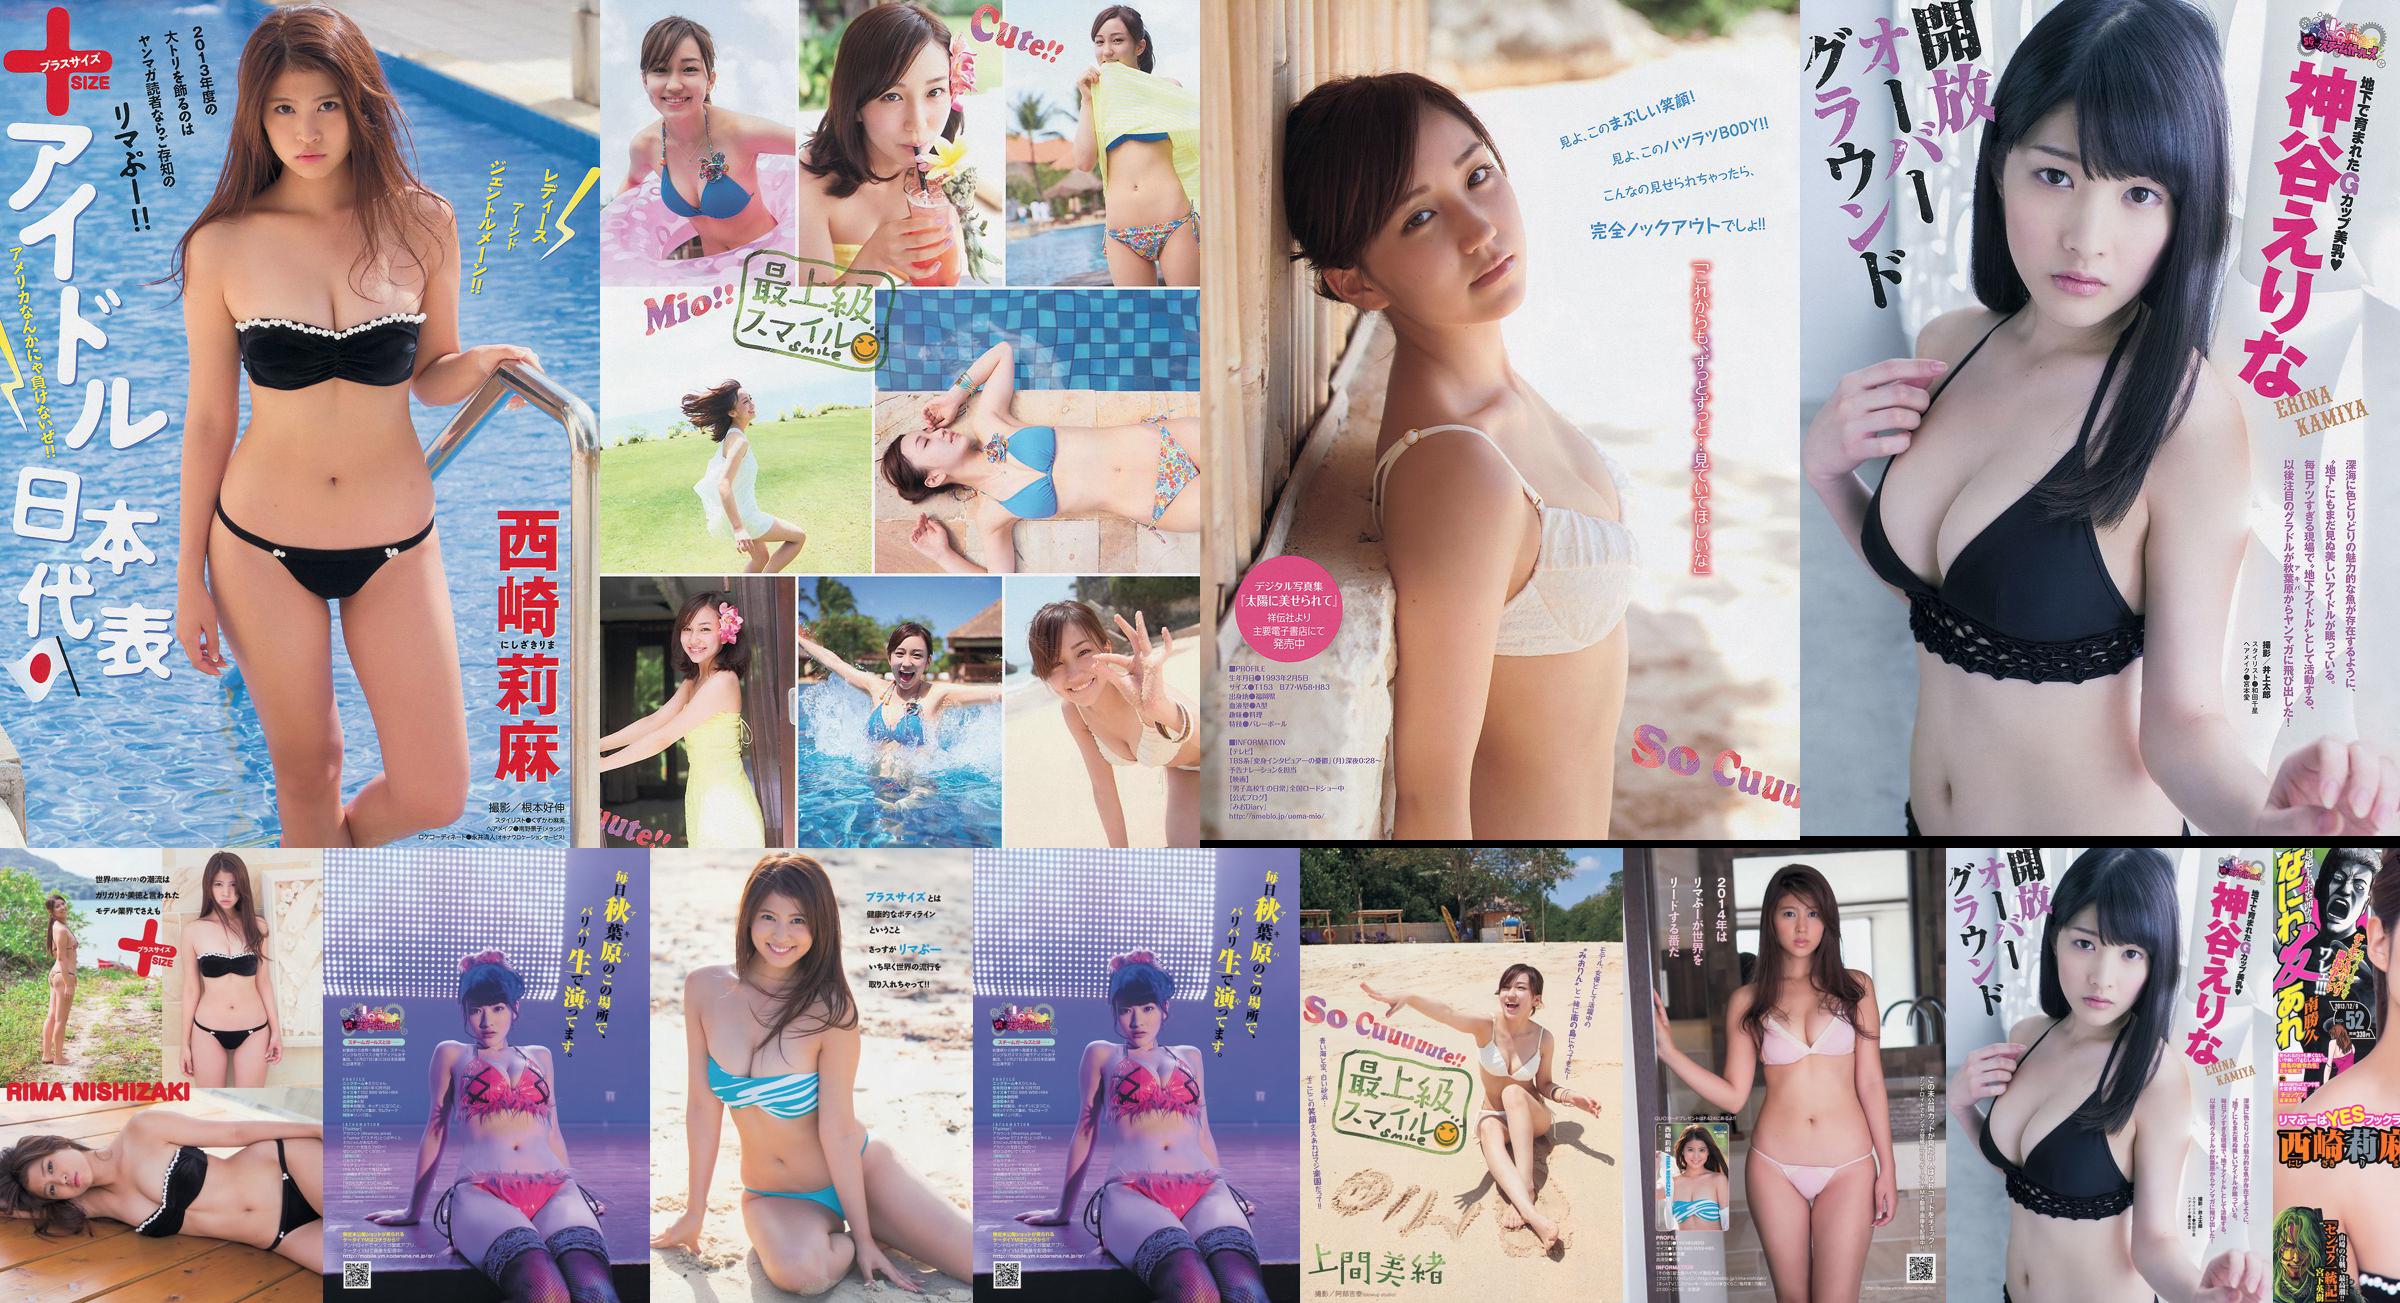 [Majalah Muda] Rima Nishizaki Mio Uema Erina Kamiya 2013 No.52 Foto Moshi No.0c6acd Halaman 1